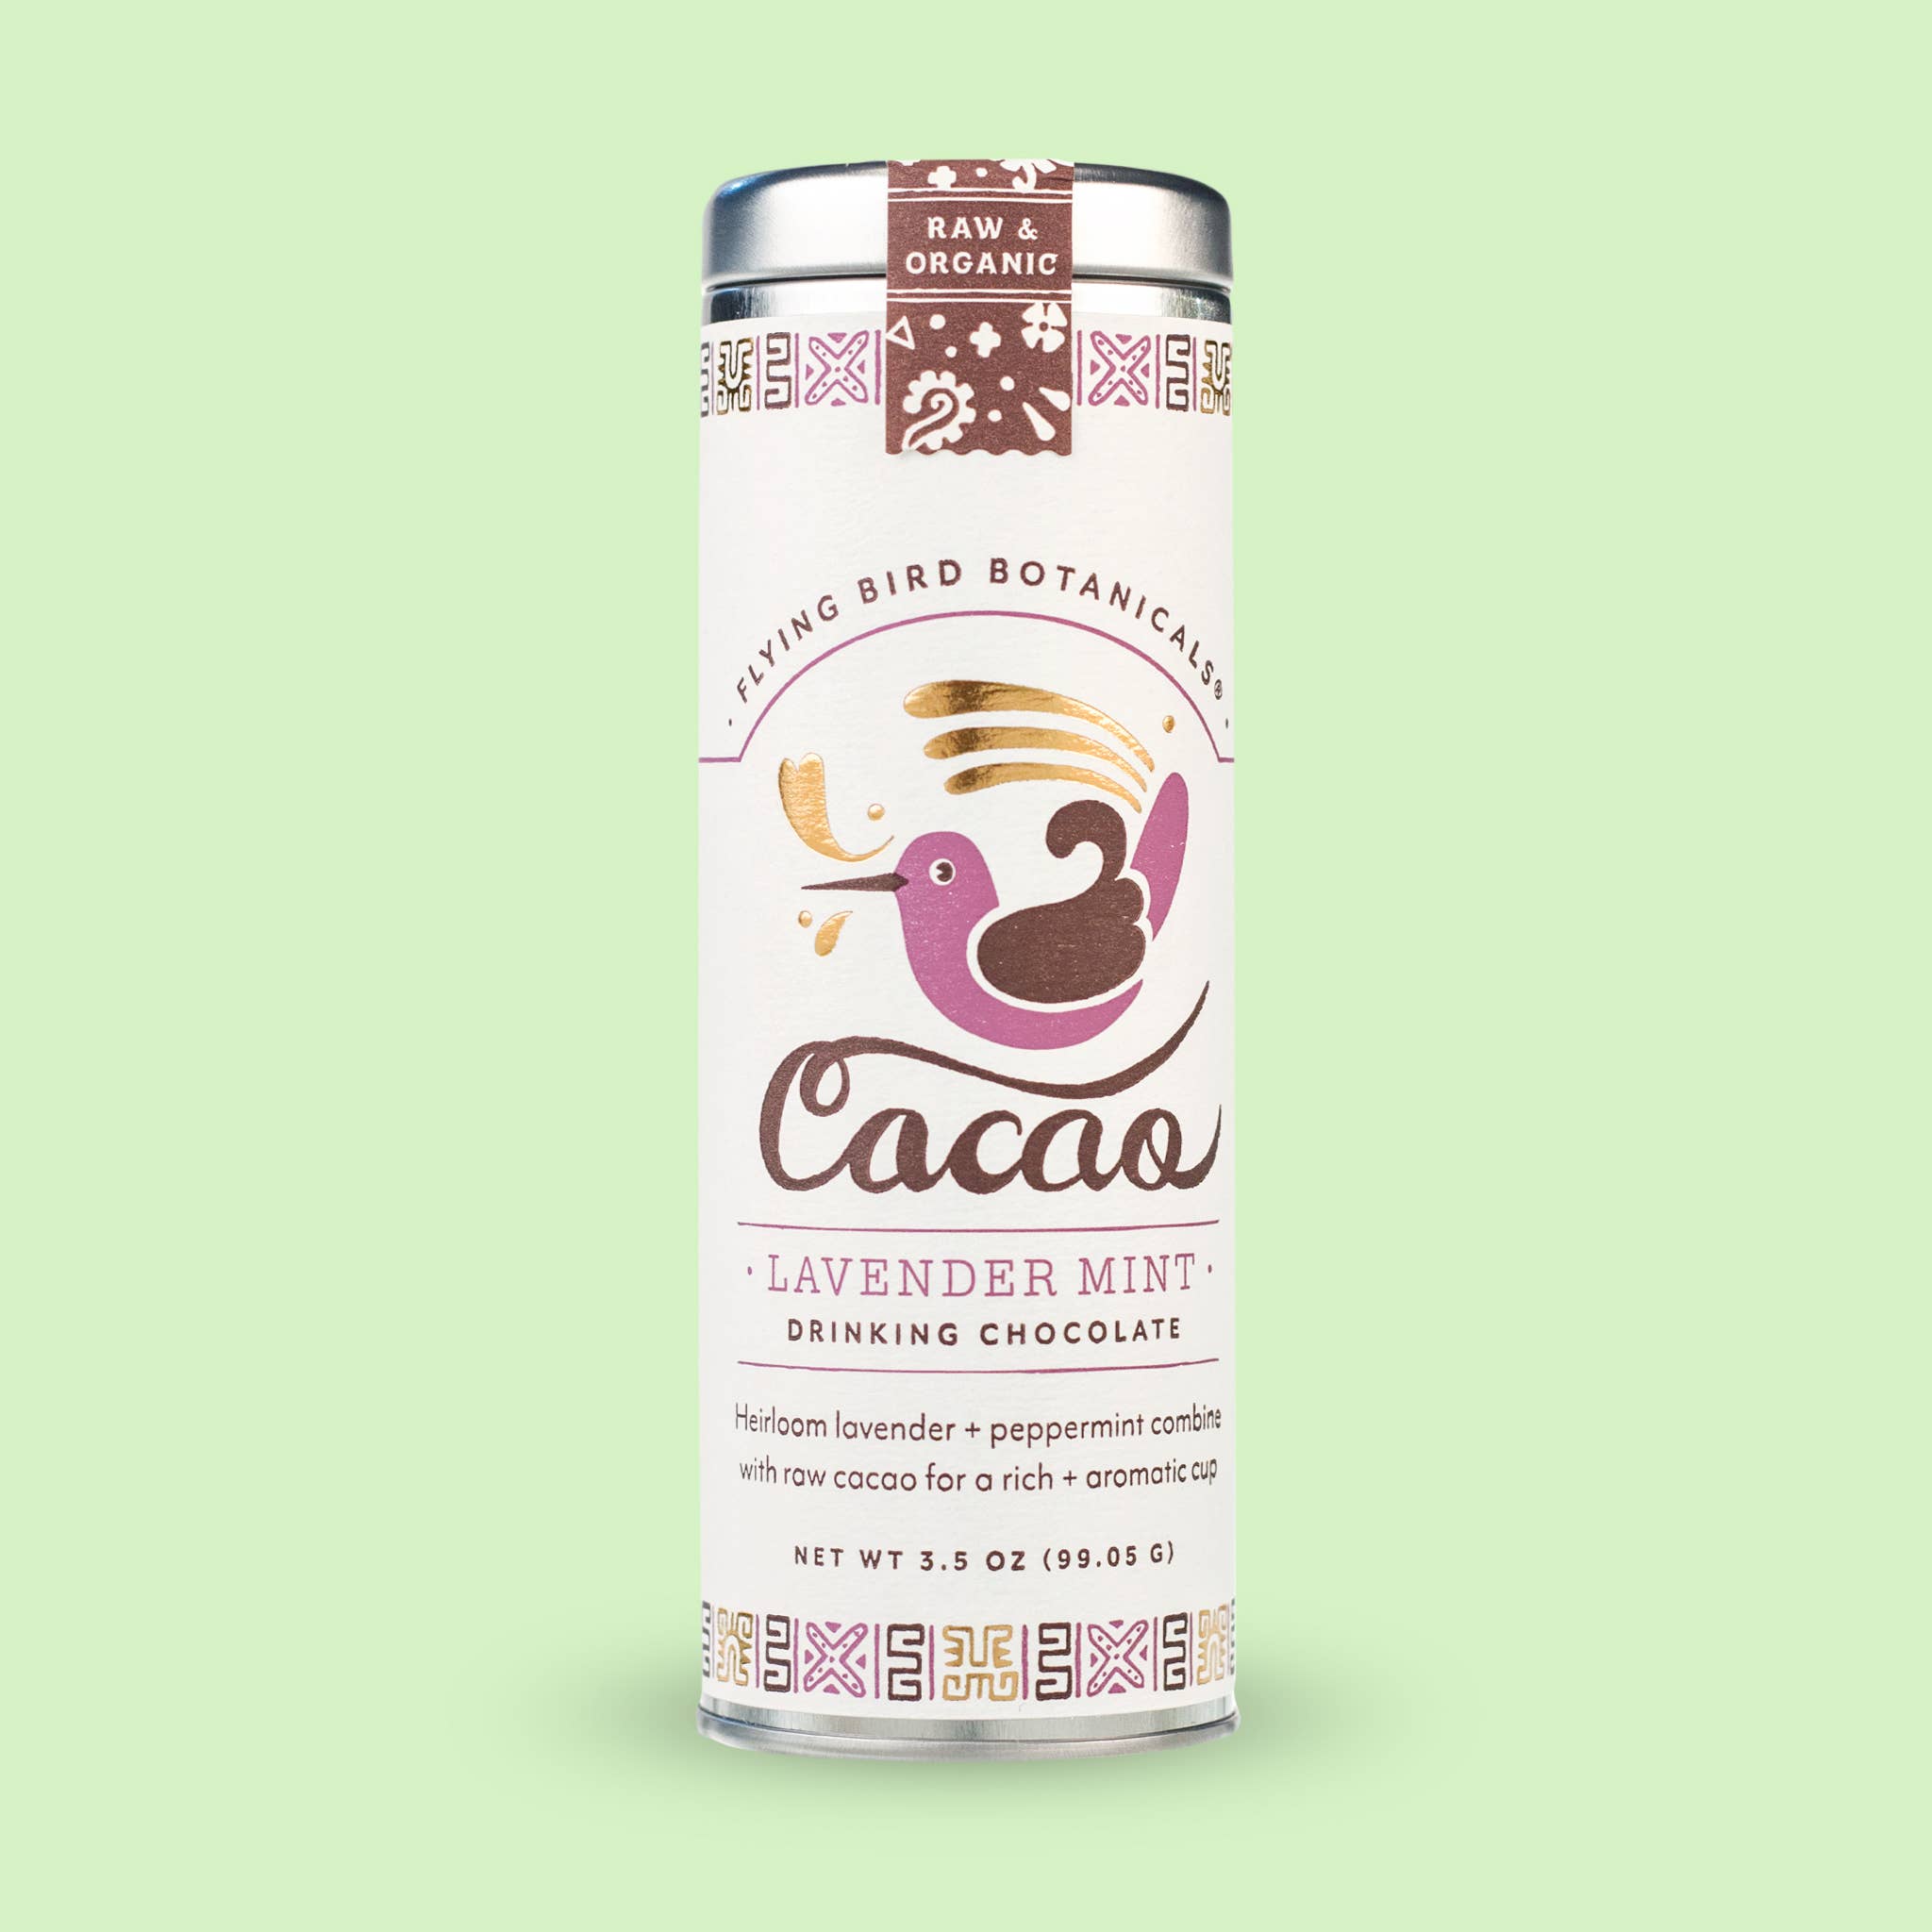 Flying Bird Botanicals - Lavender Mint Cacao Drinking Chocolate